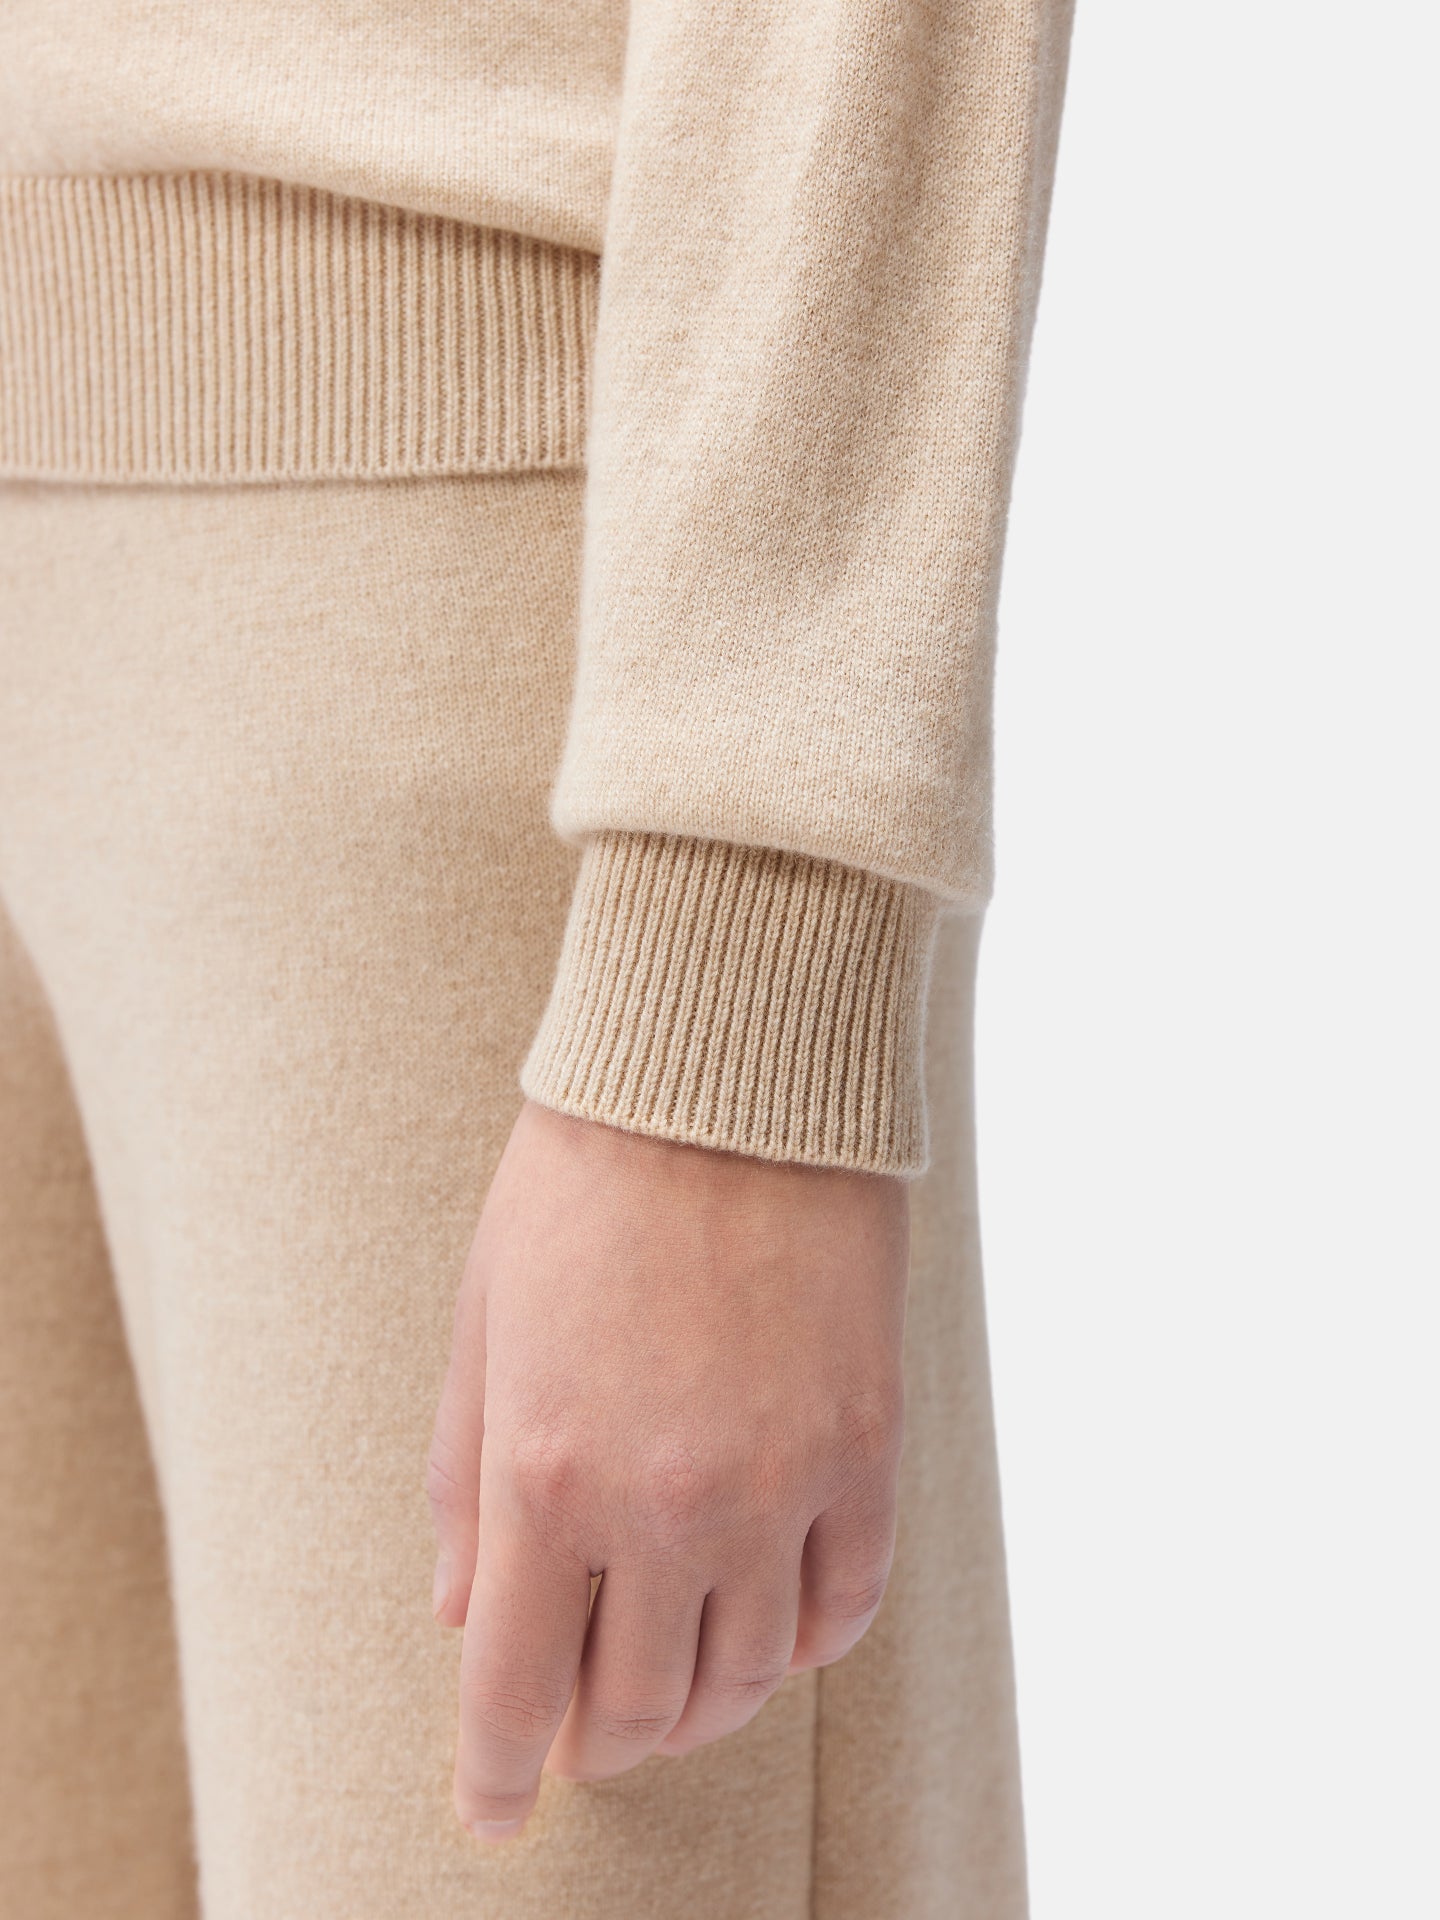 Women's Asymmetrical Cashmere Sweater Beige - Gobi Cashmere